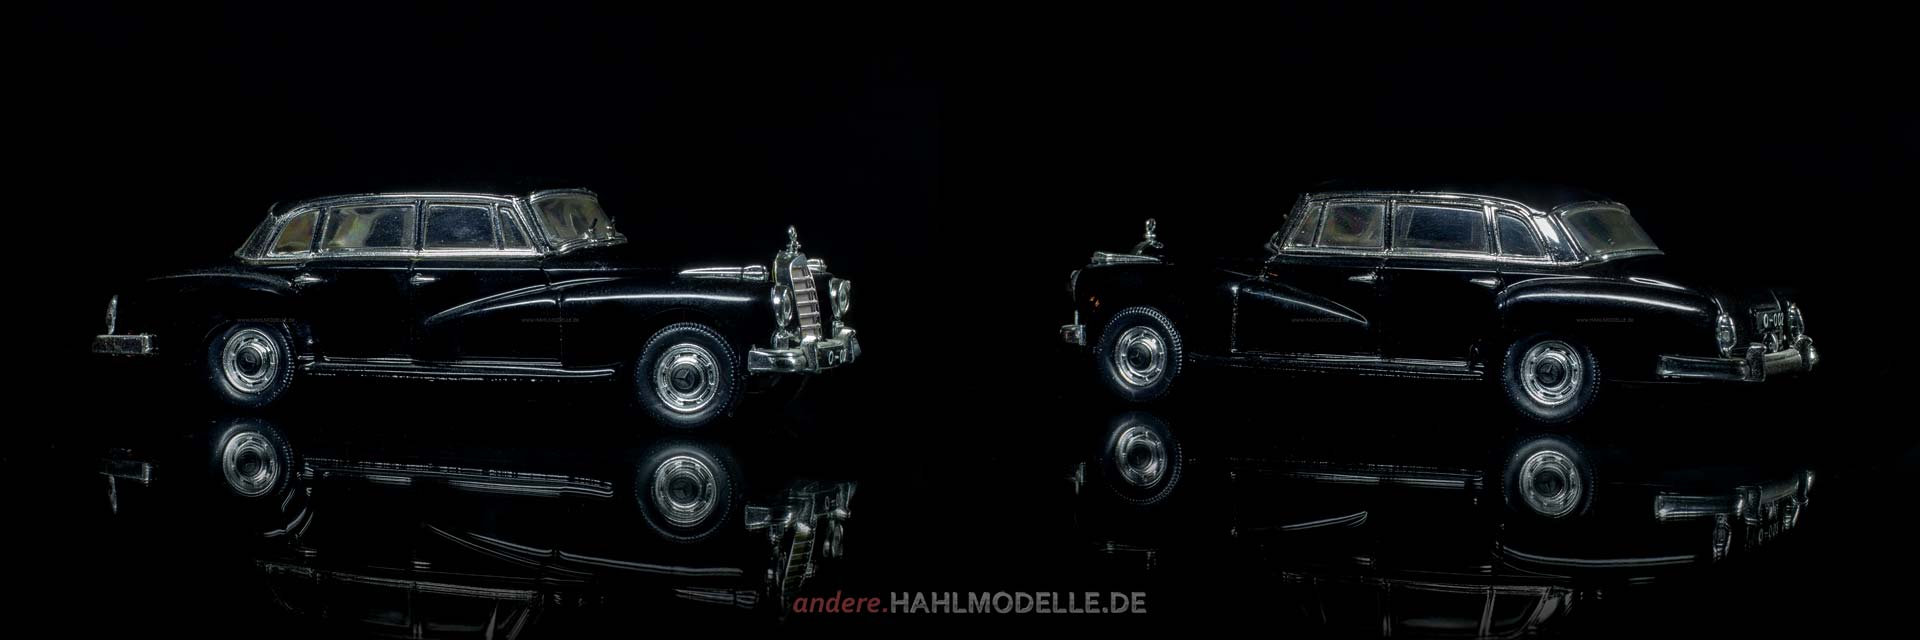 Mercedes-Benz 300d "Adenauer" (W 189) | Limousine | Rio | www.andere.hahlmodelle.de